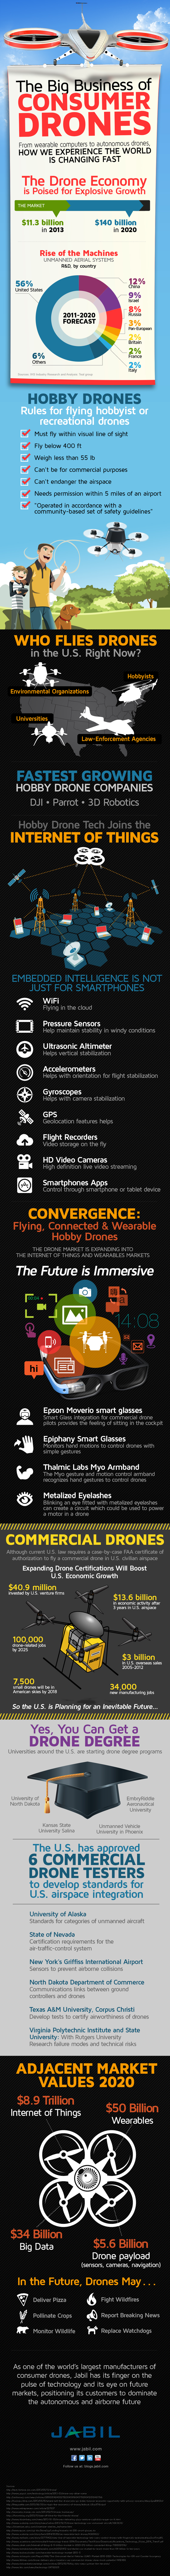 Big Business of Consumer Drones